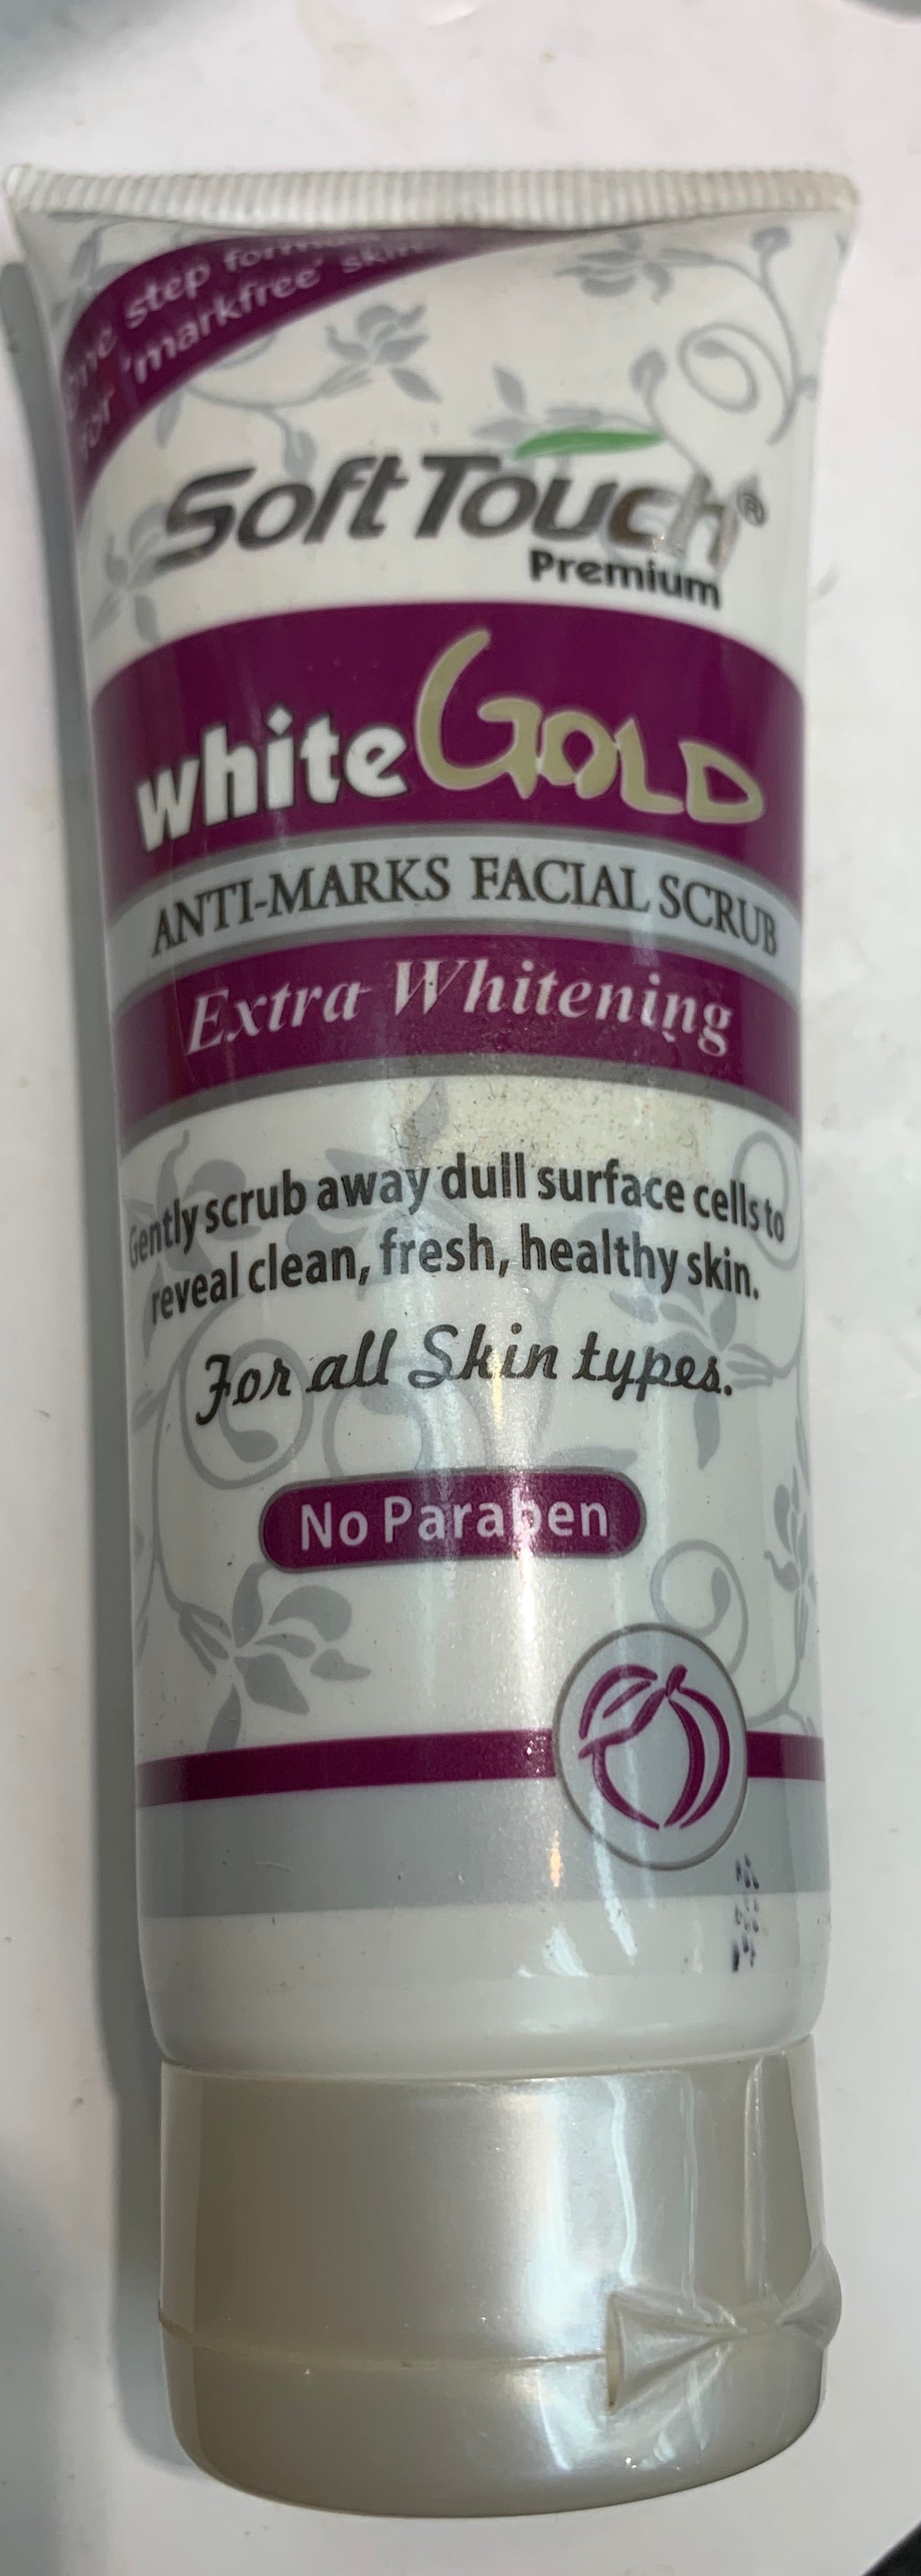 Soft touch white gold anti-mark facial scrub 60g